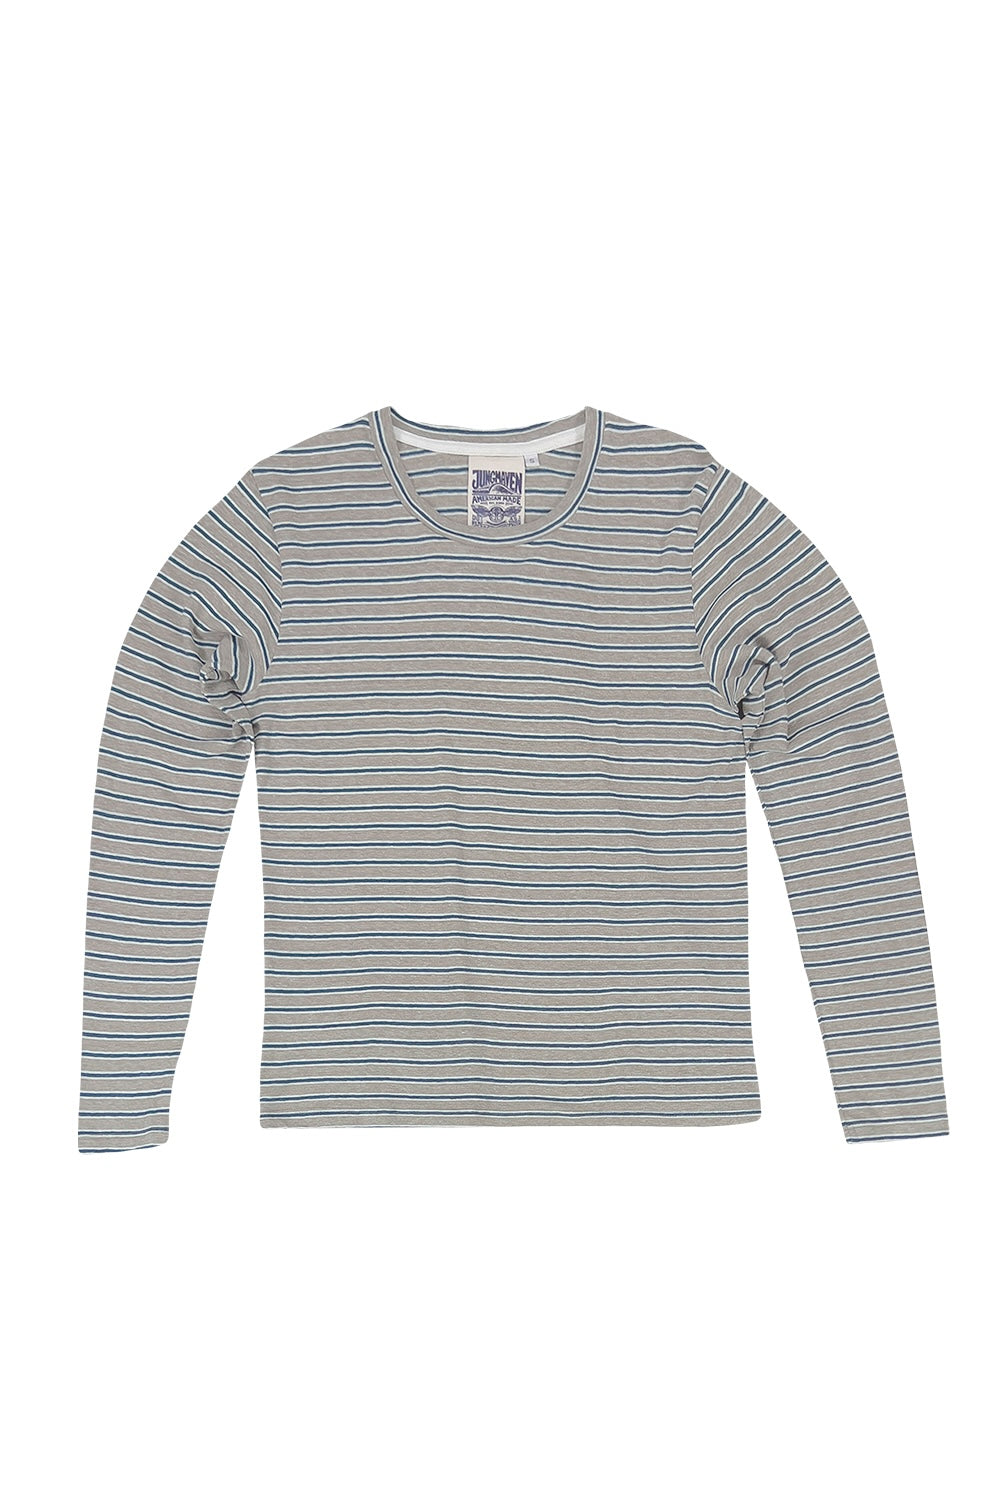 Stripe Encanto Long Sleeve Tee | Jungmaven Hemp Clothing & Accessories / Color: Teal/White/Gray Stripe